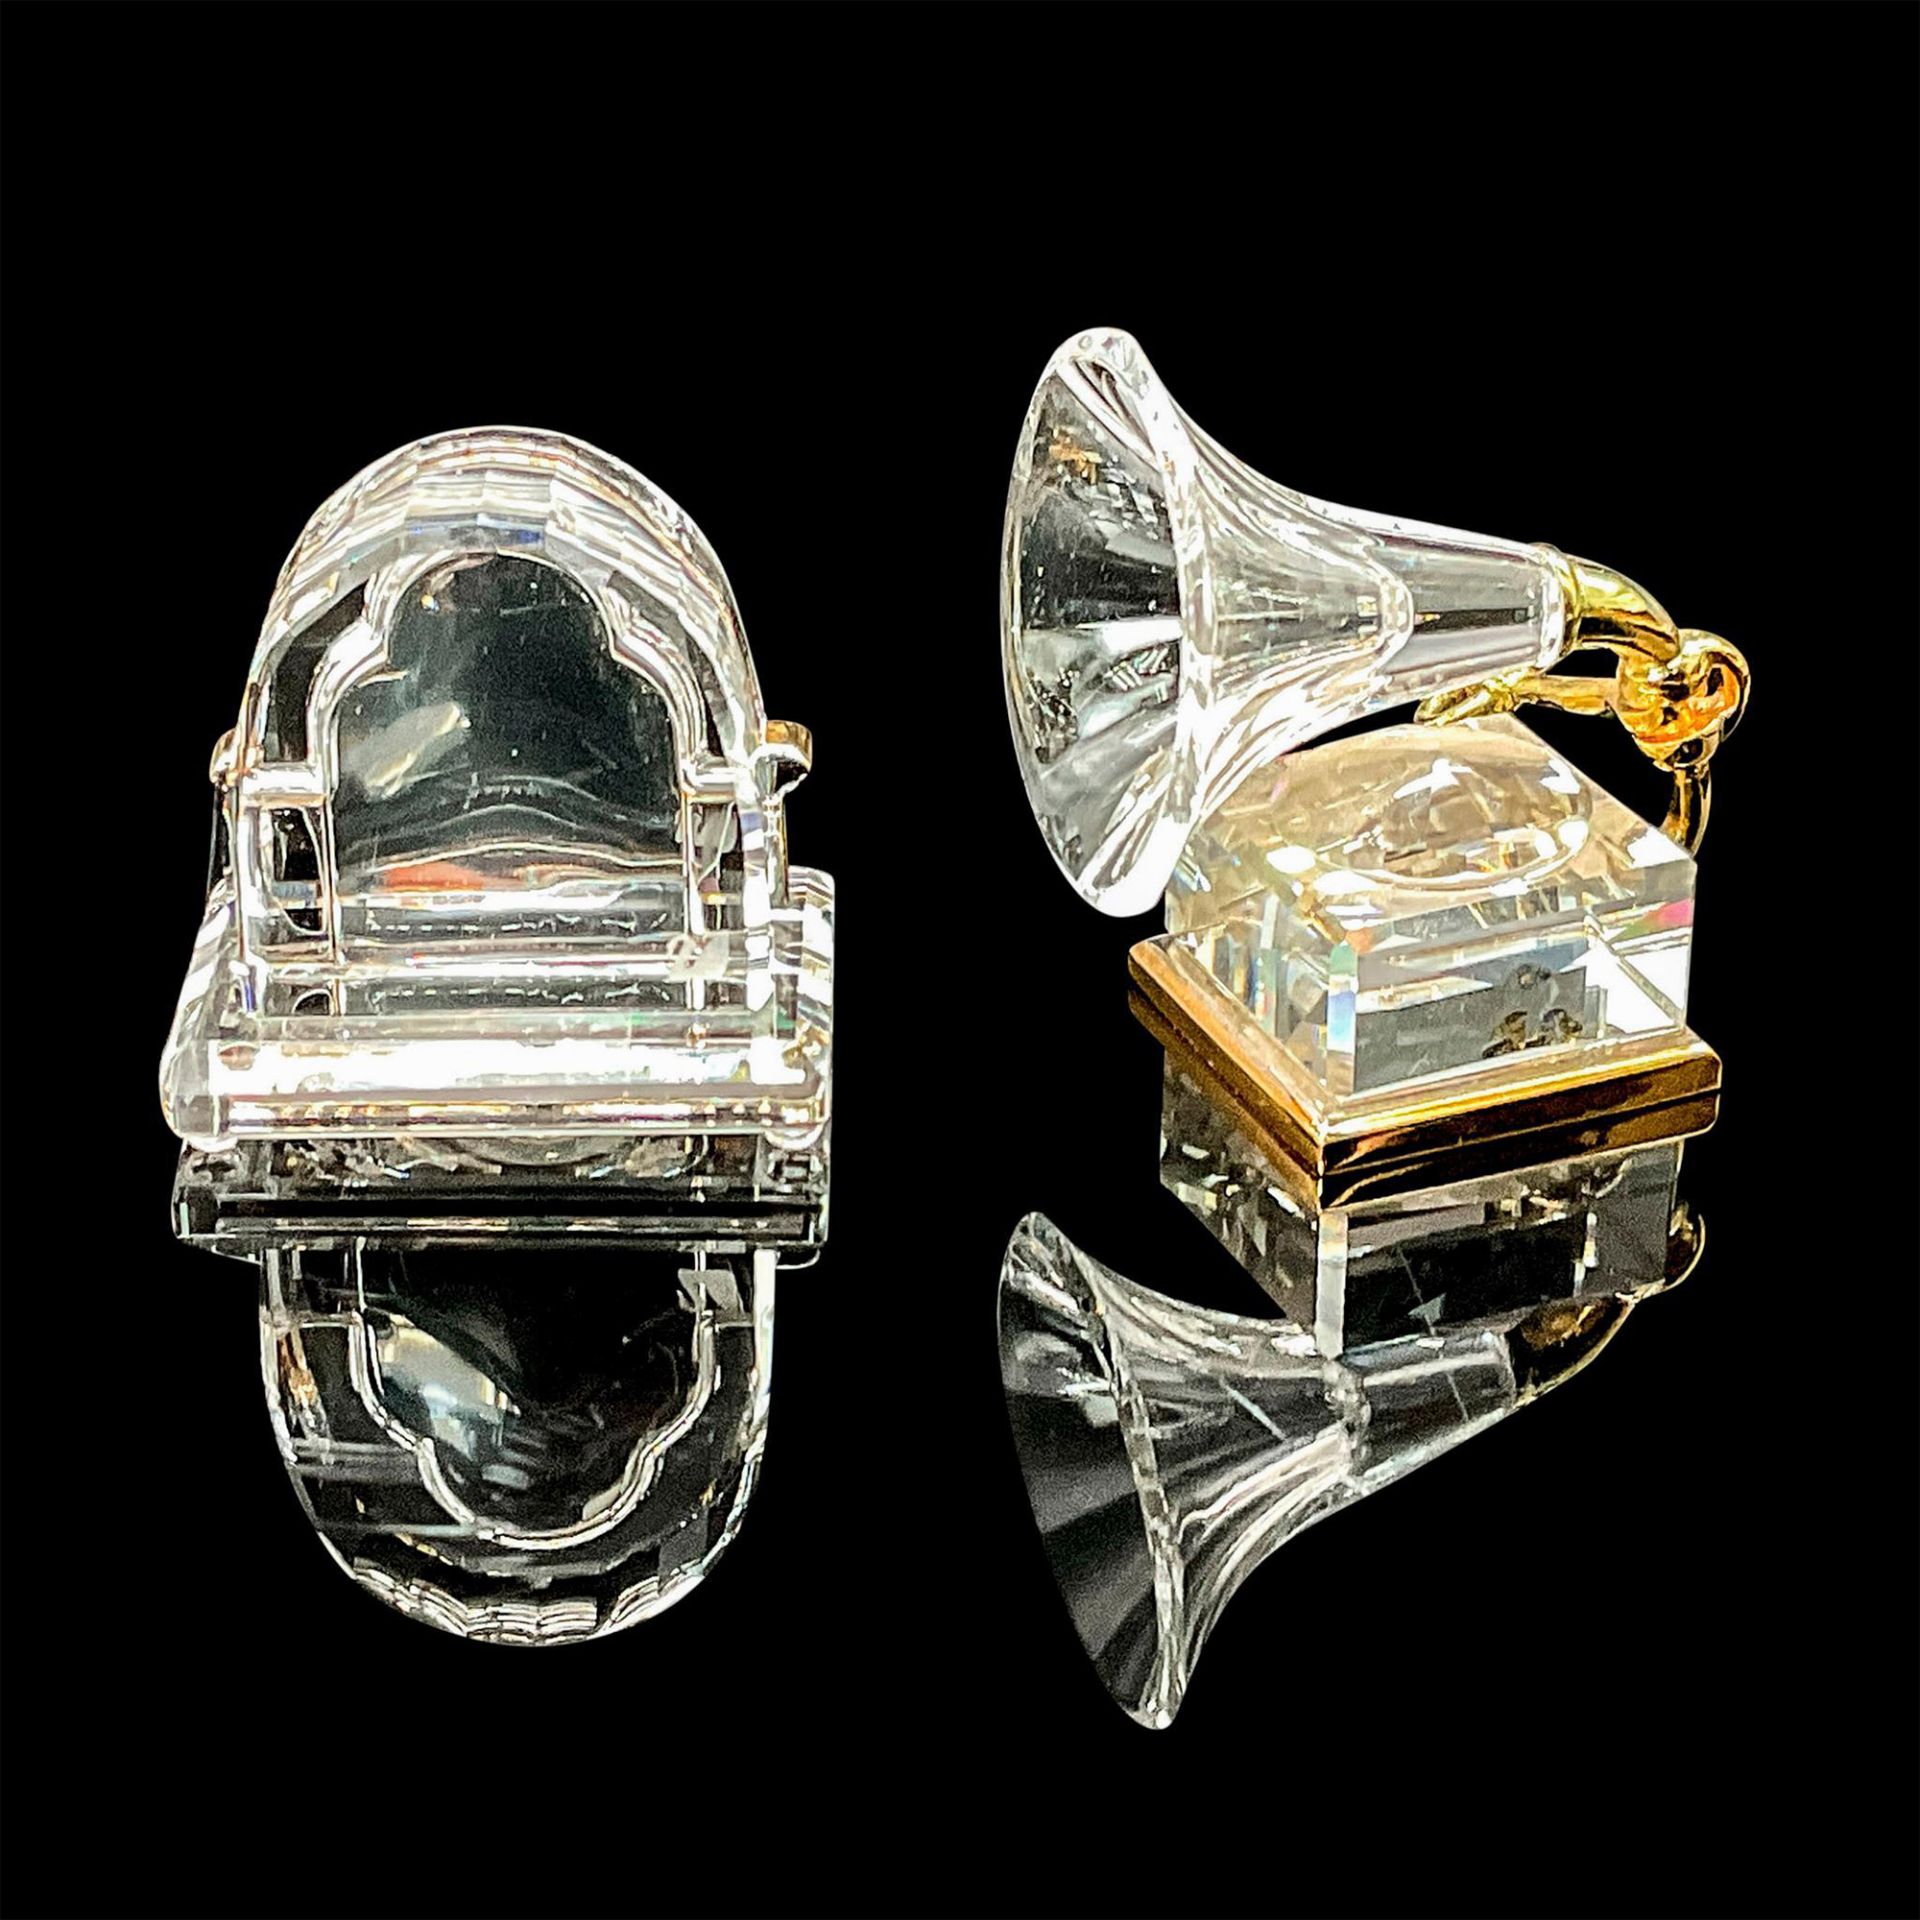 Pair of Swarovski Crystal Memories Classics Figurines - Image 2 of 3